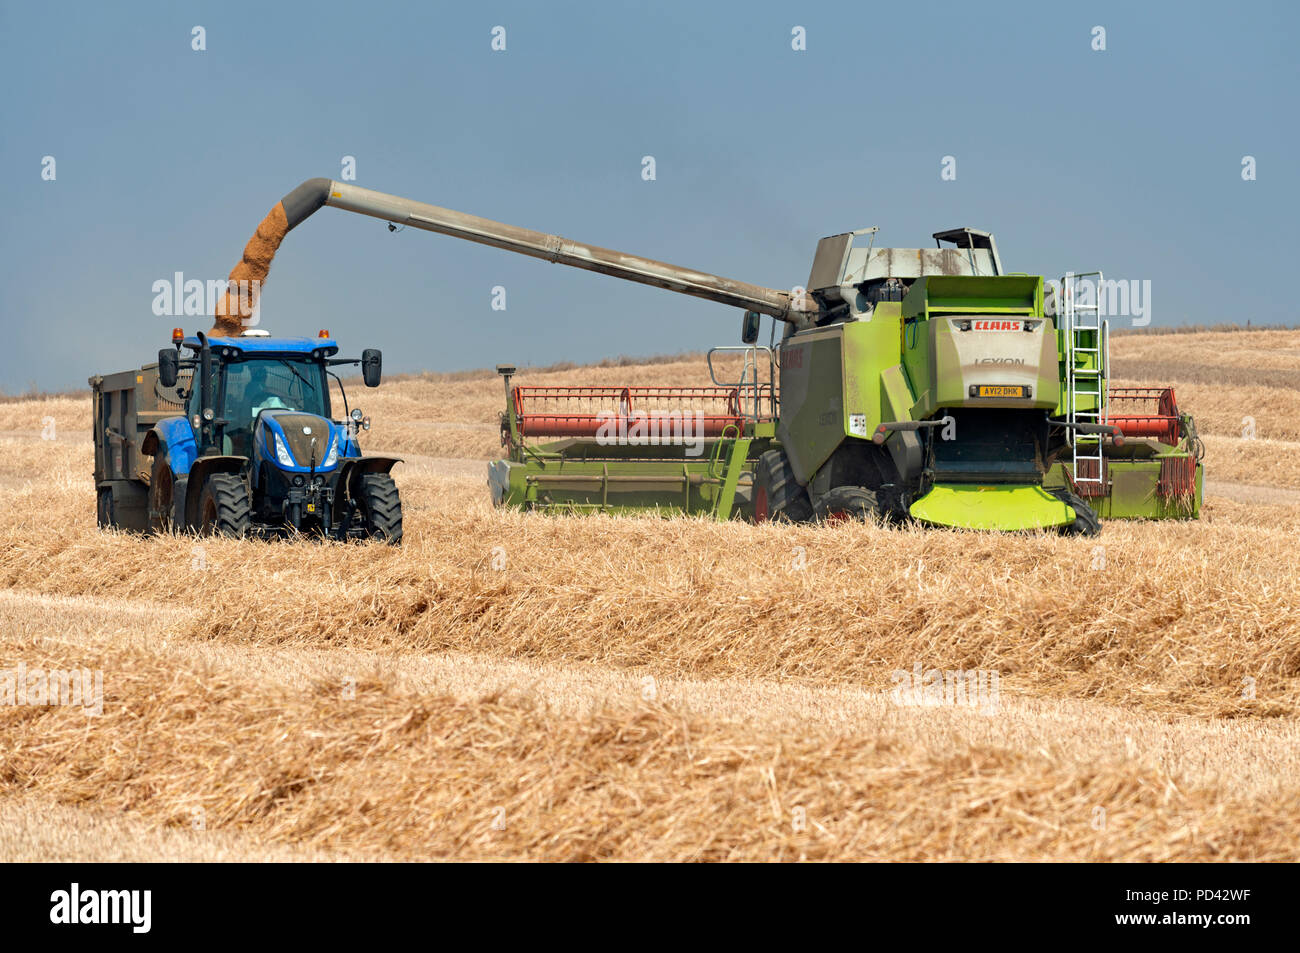 Class Lexion 740 combiner harvester Stock Photo